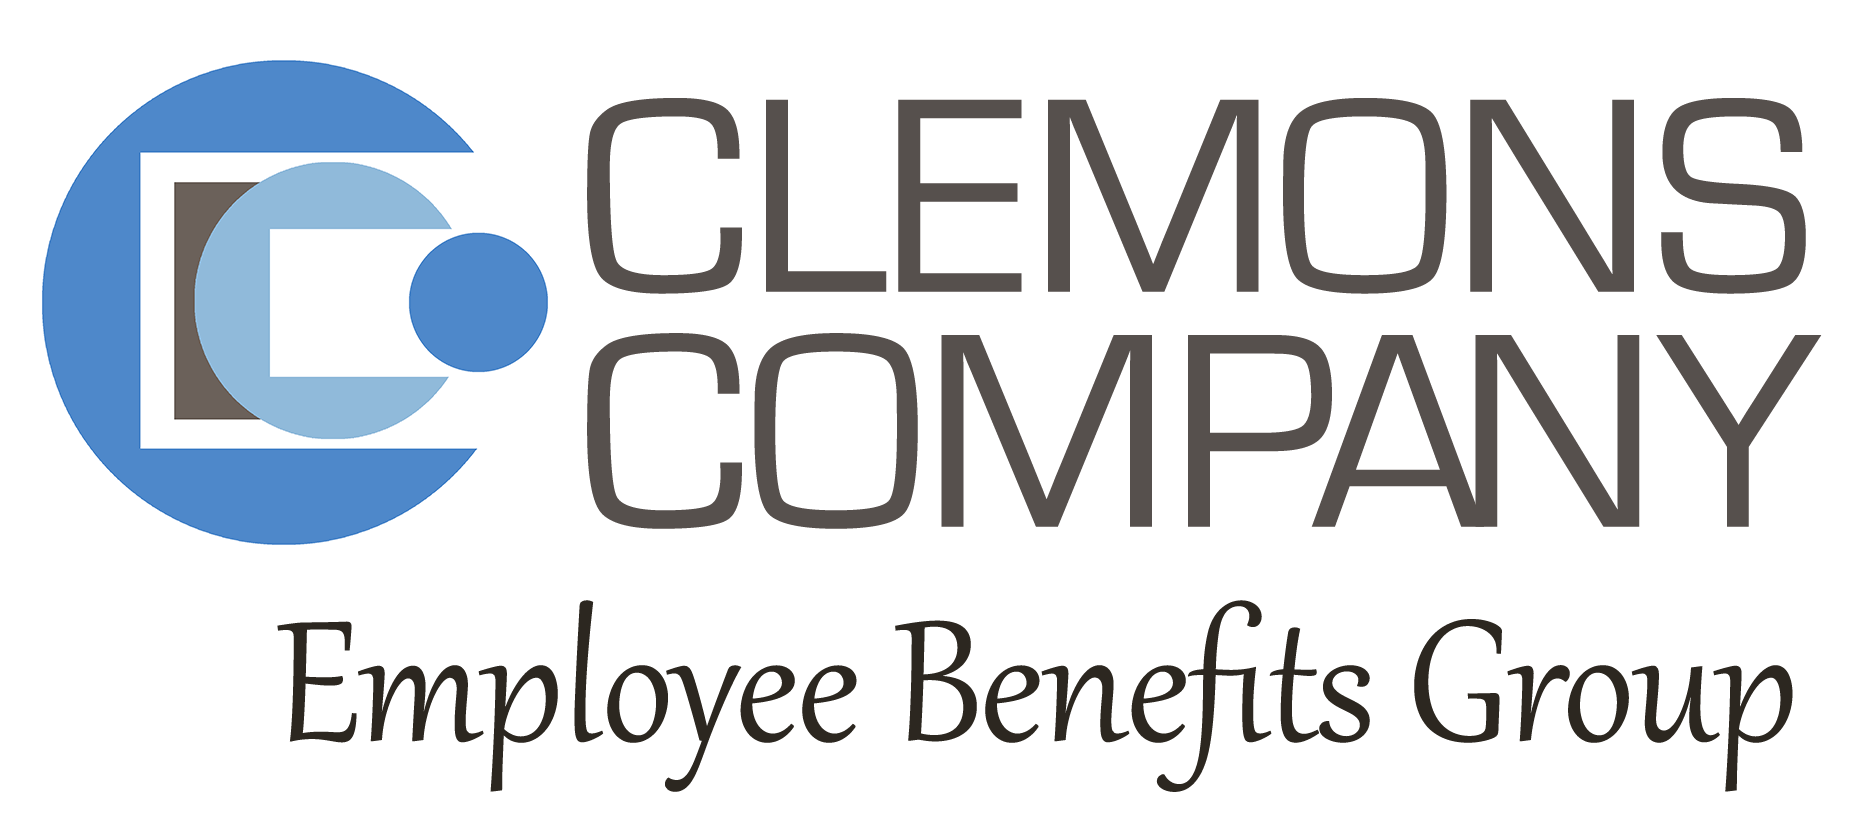 The Clemons Company Img